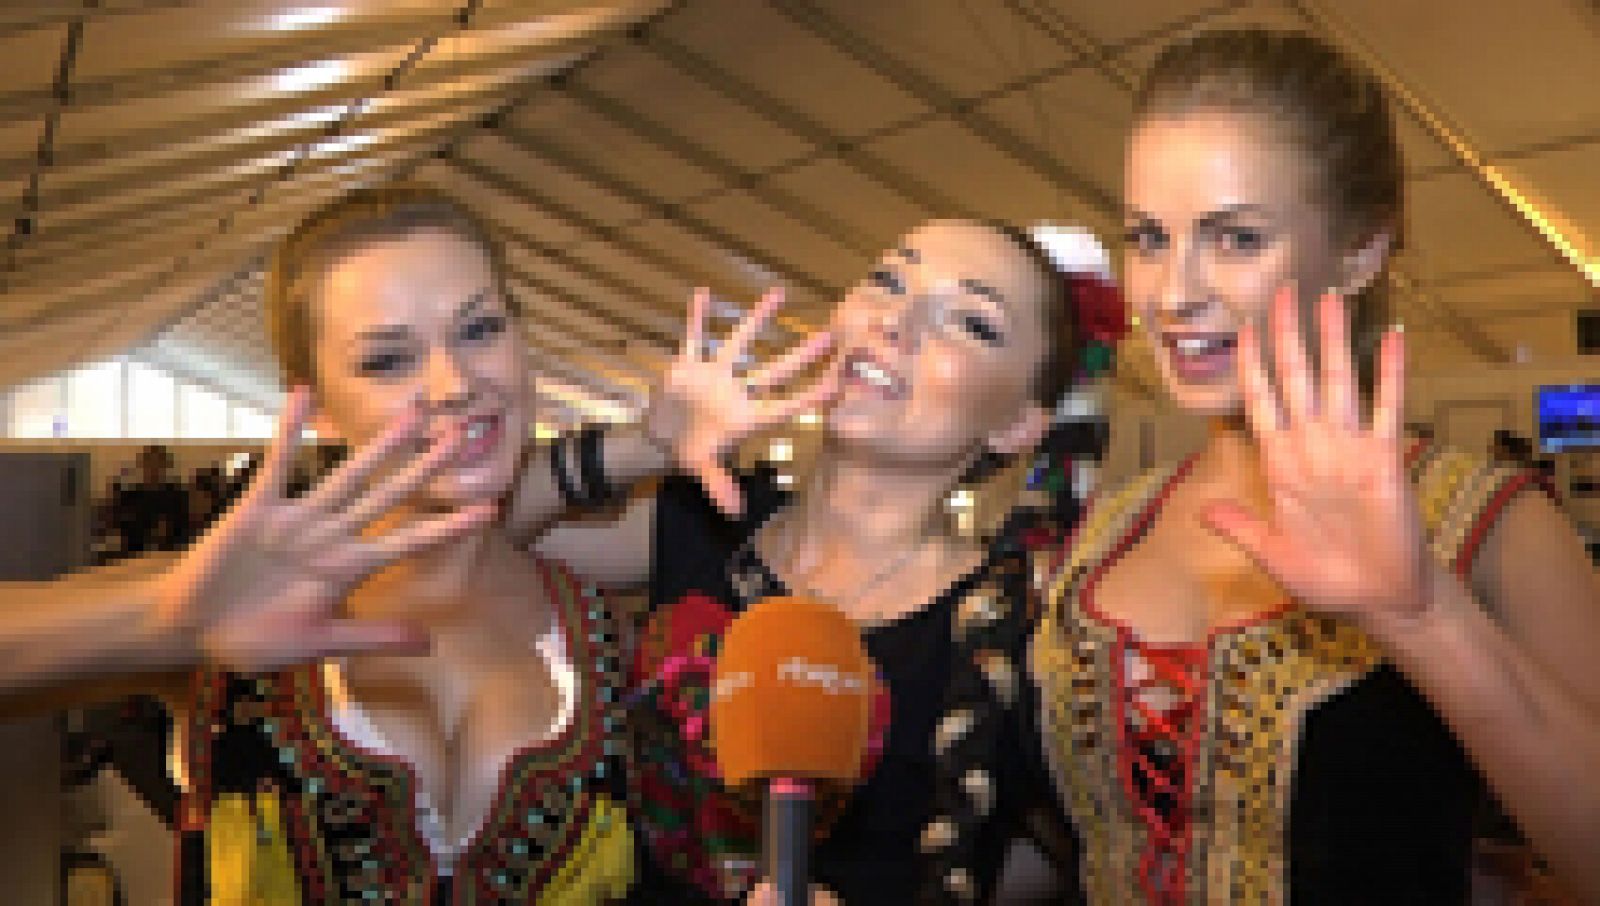 Eurovisión 2014 - #Euroweek: Entrevista a Cloe y sus bellezas polacas